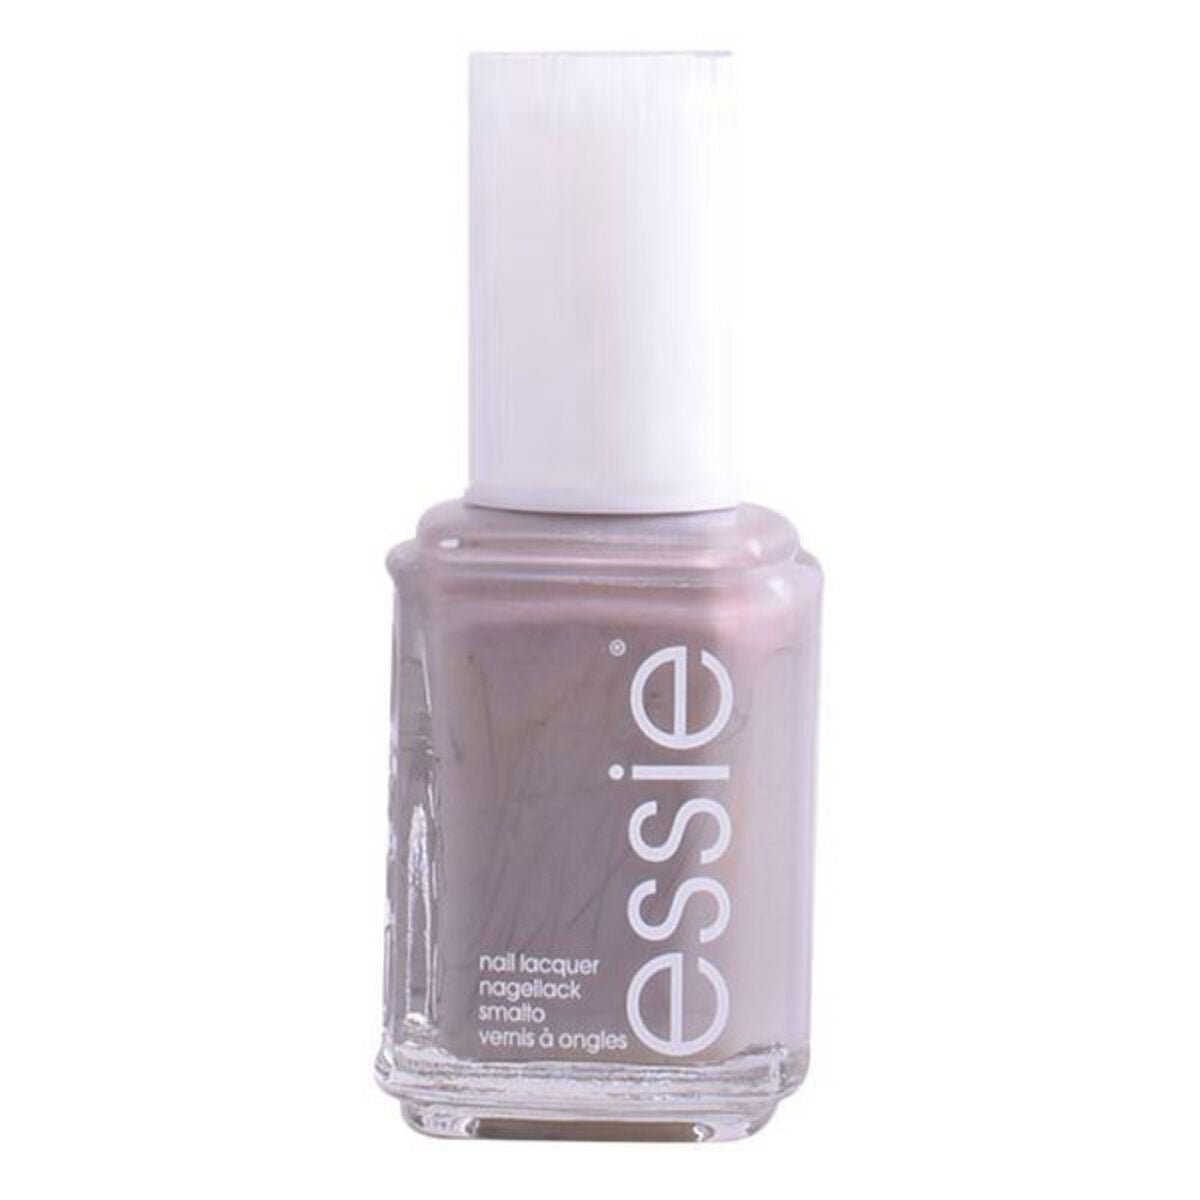 nail polish Color Essie (13,5 ml) - JOSEPH BEAUTY